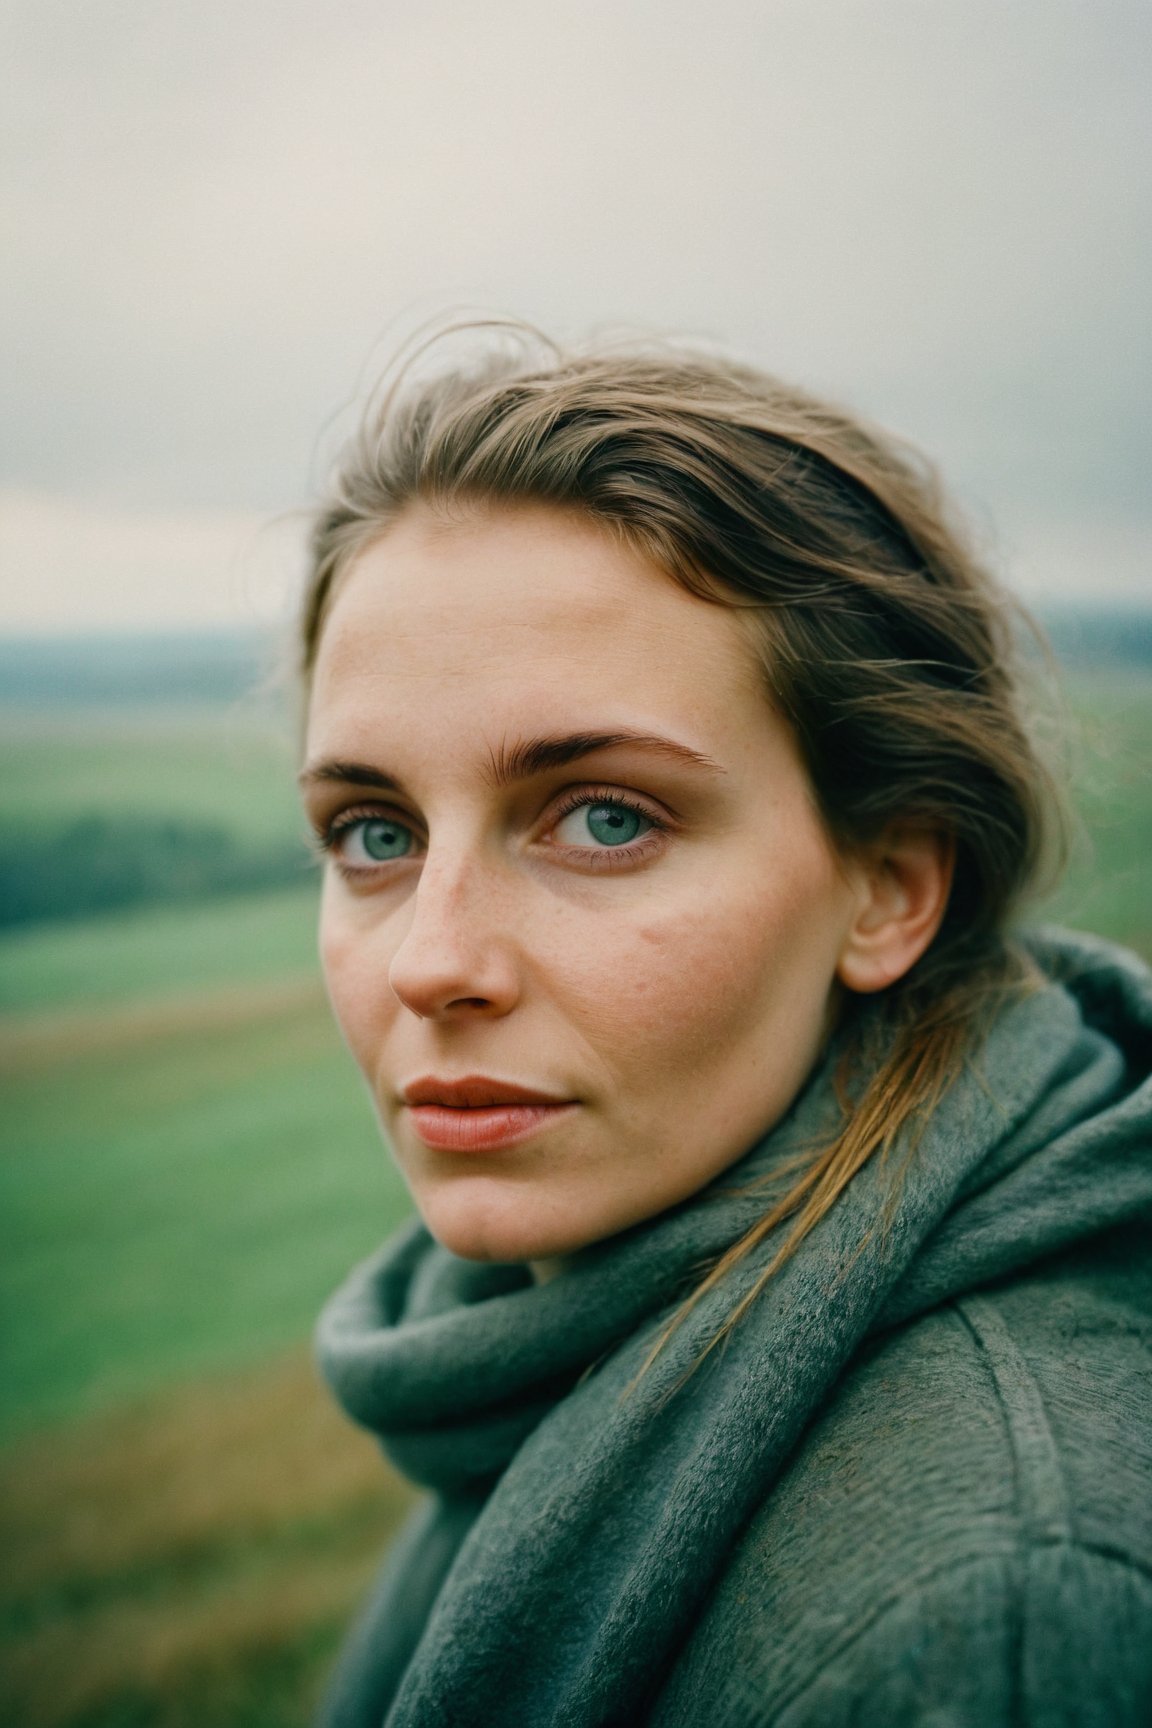 RAW Photo, a beautiful Slovakian woman, overcast weather, hyperdetailed photo, soft light, Kodak Ektar 100, rich emotive colors, DSLR